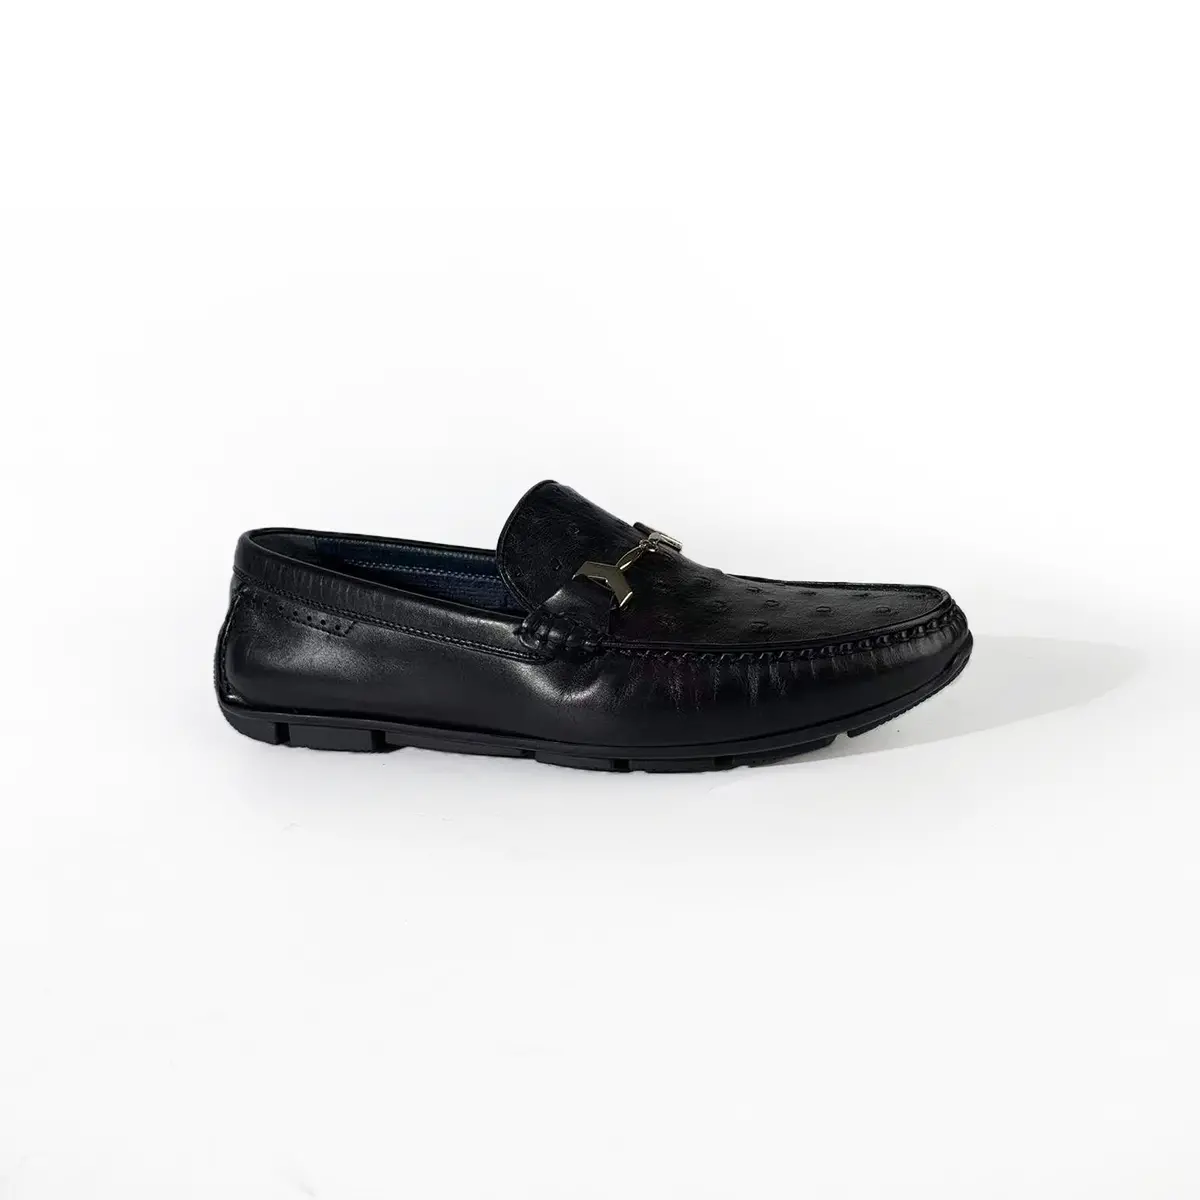 Wholesale men casual shoe in black genuine leather